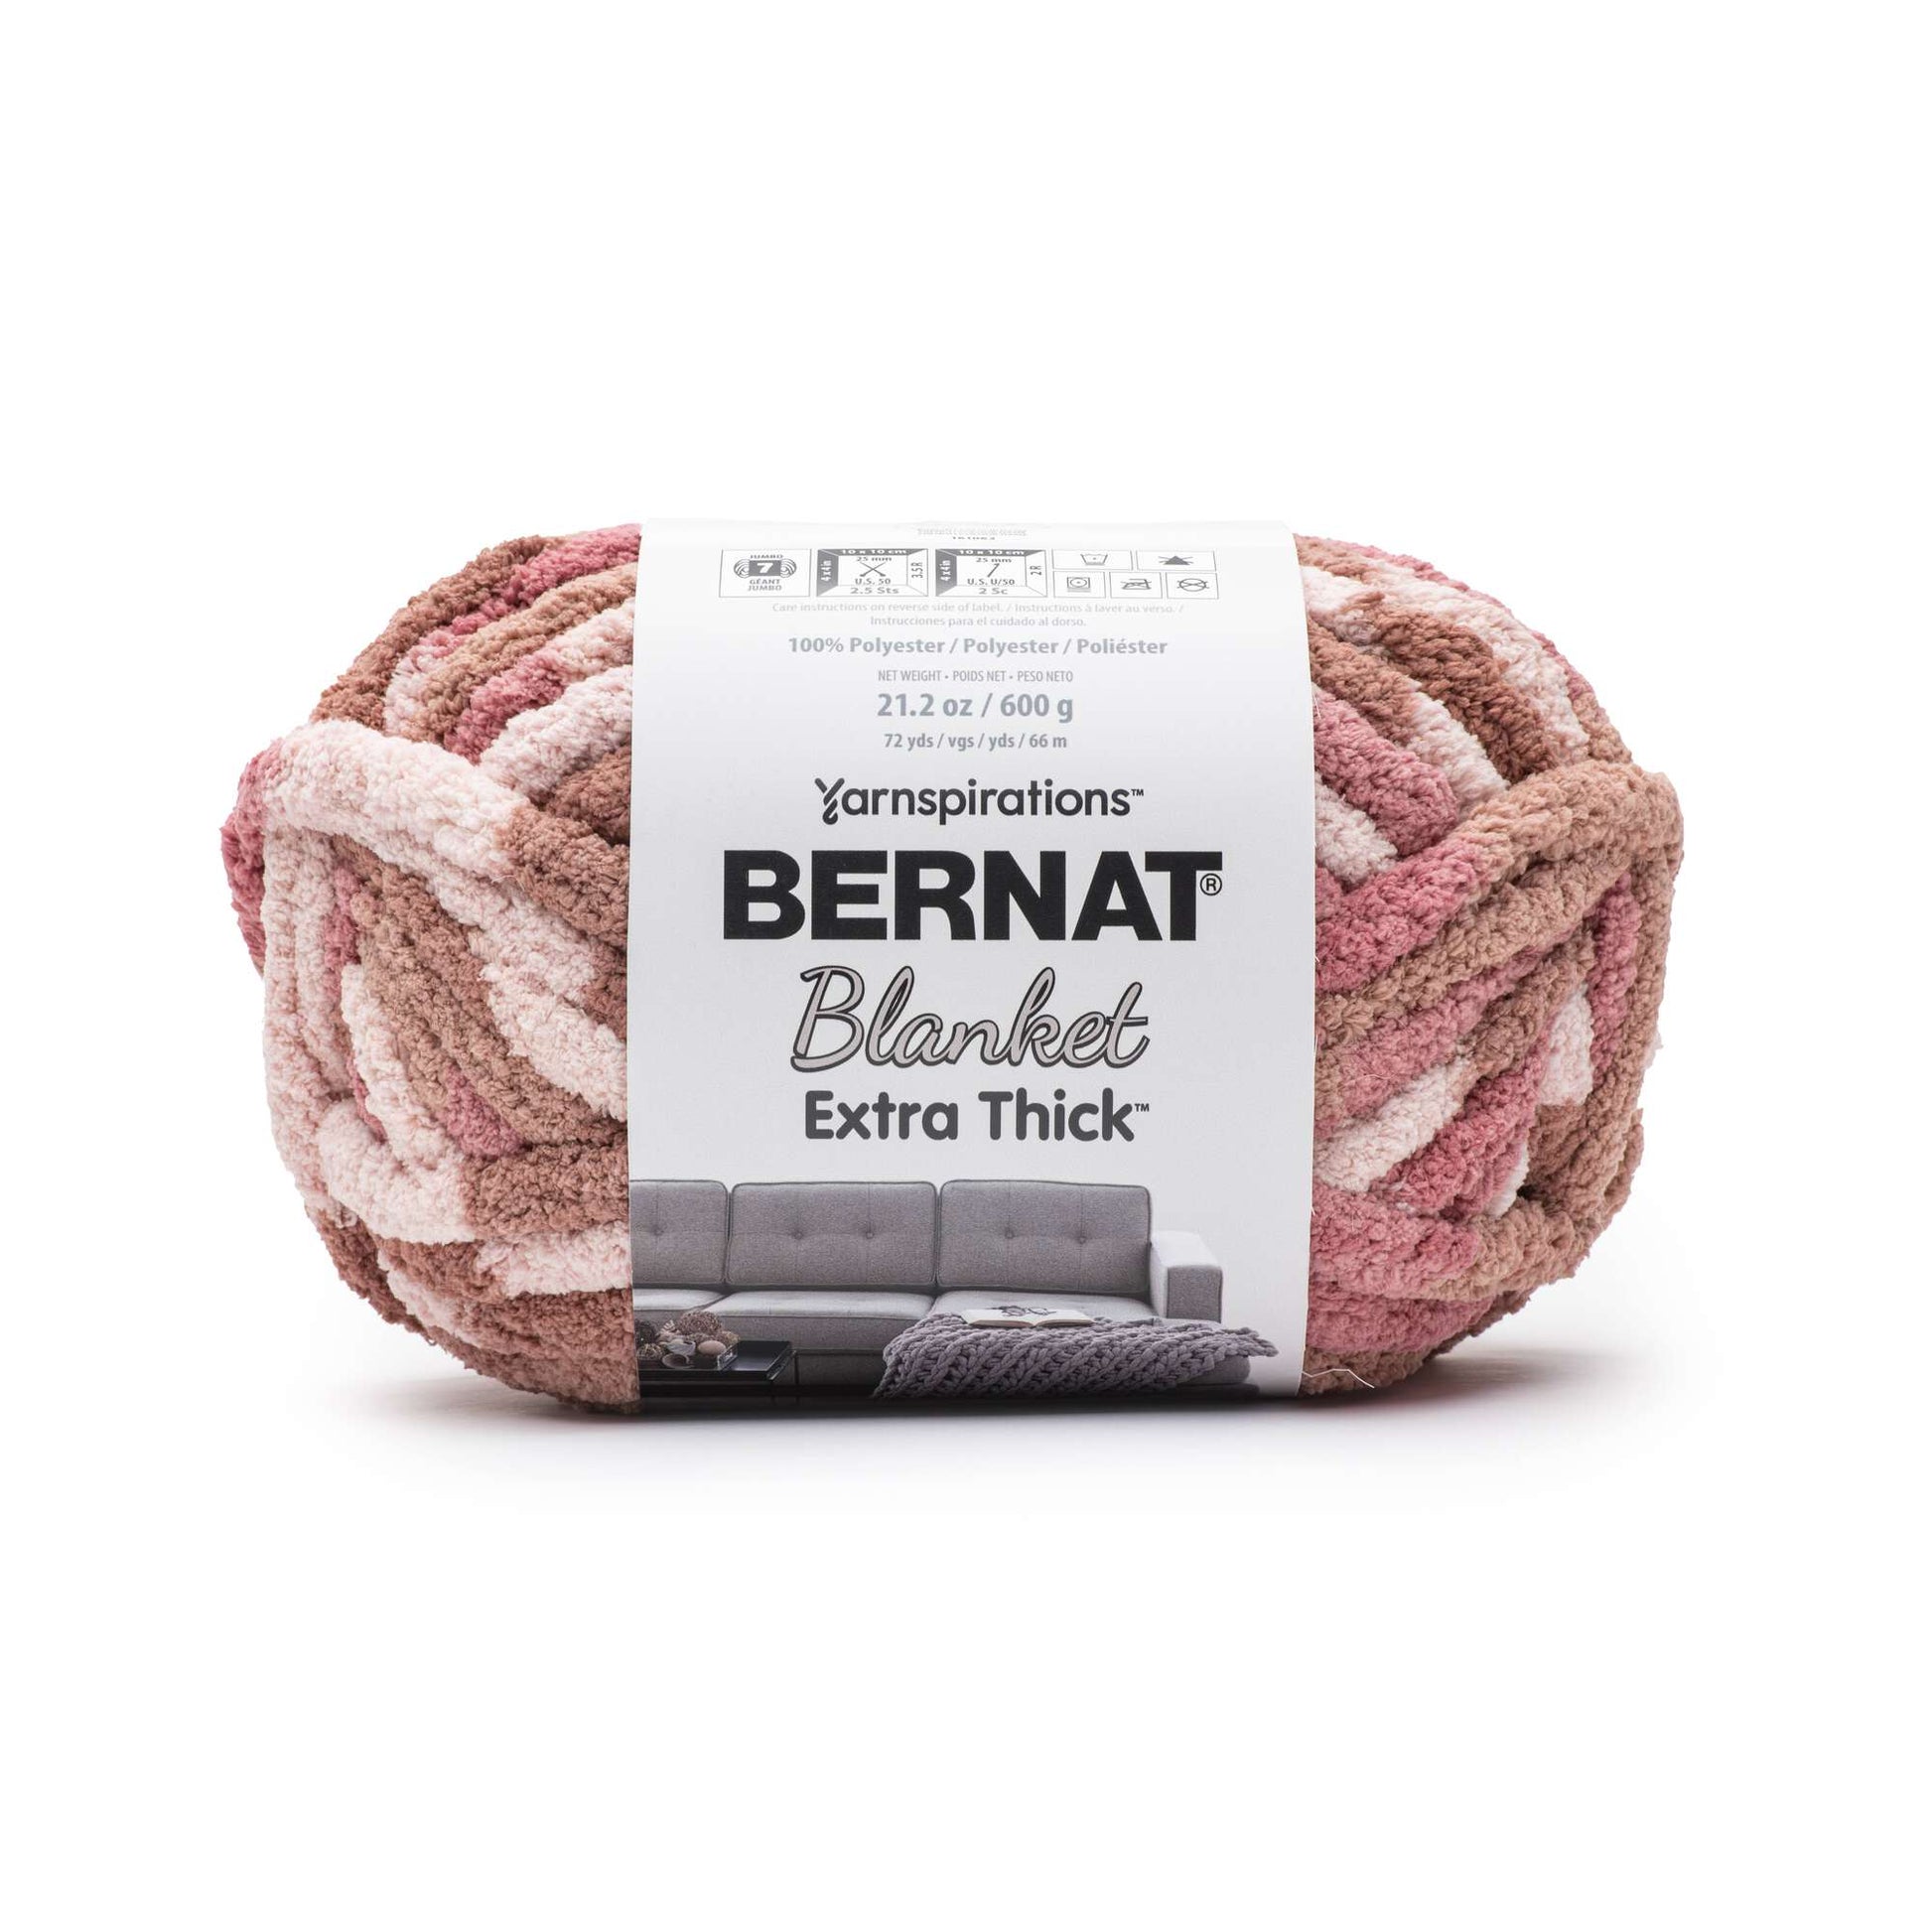 Bernat Extra Thick Blanket Yarn 6pk by Bernat